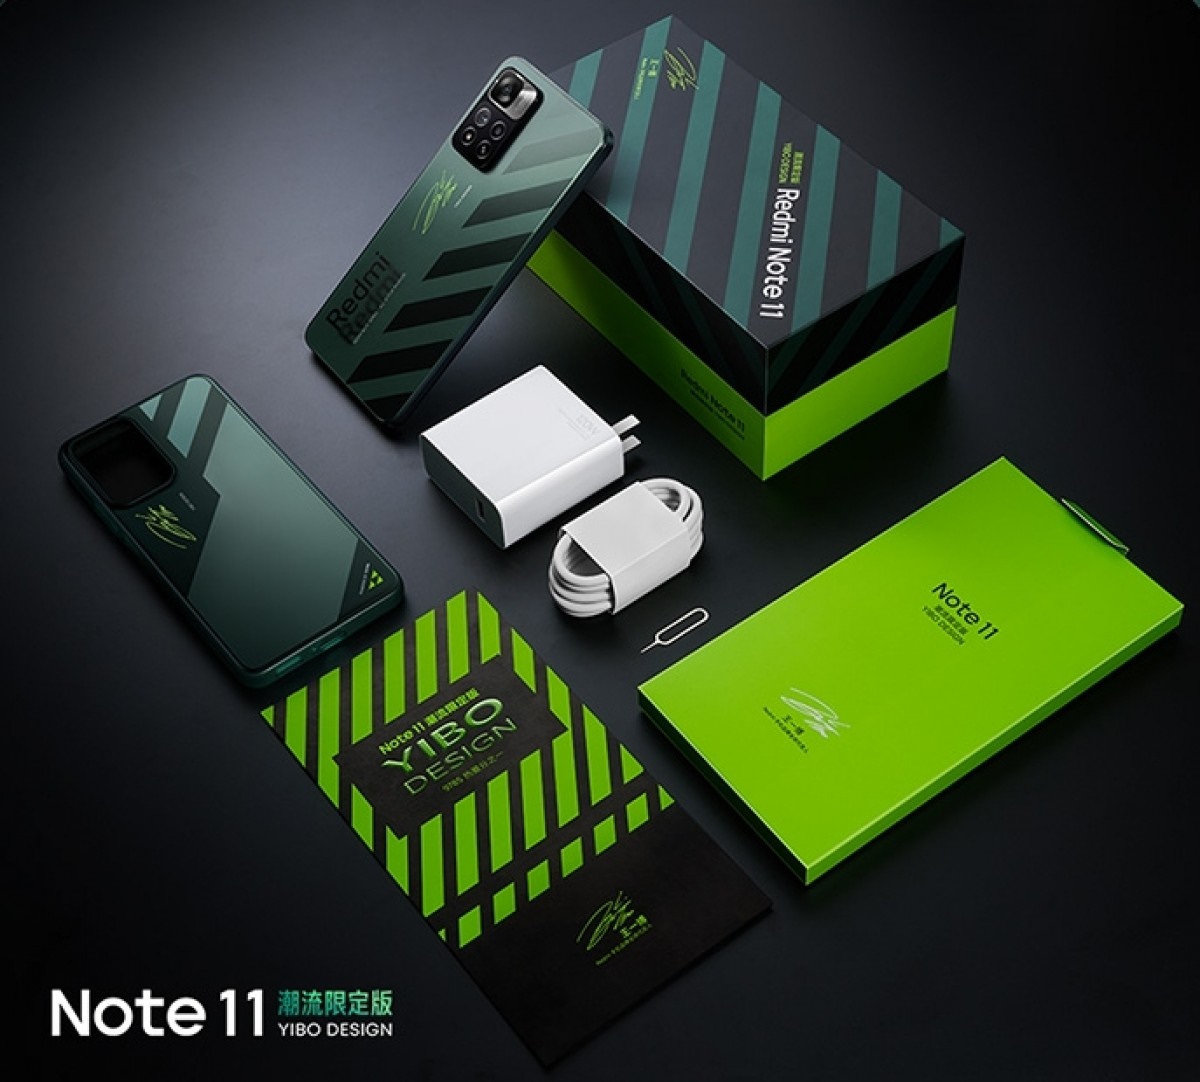 Redmi Note 11 ra mắt